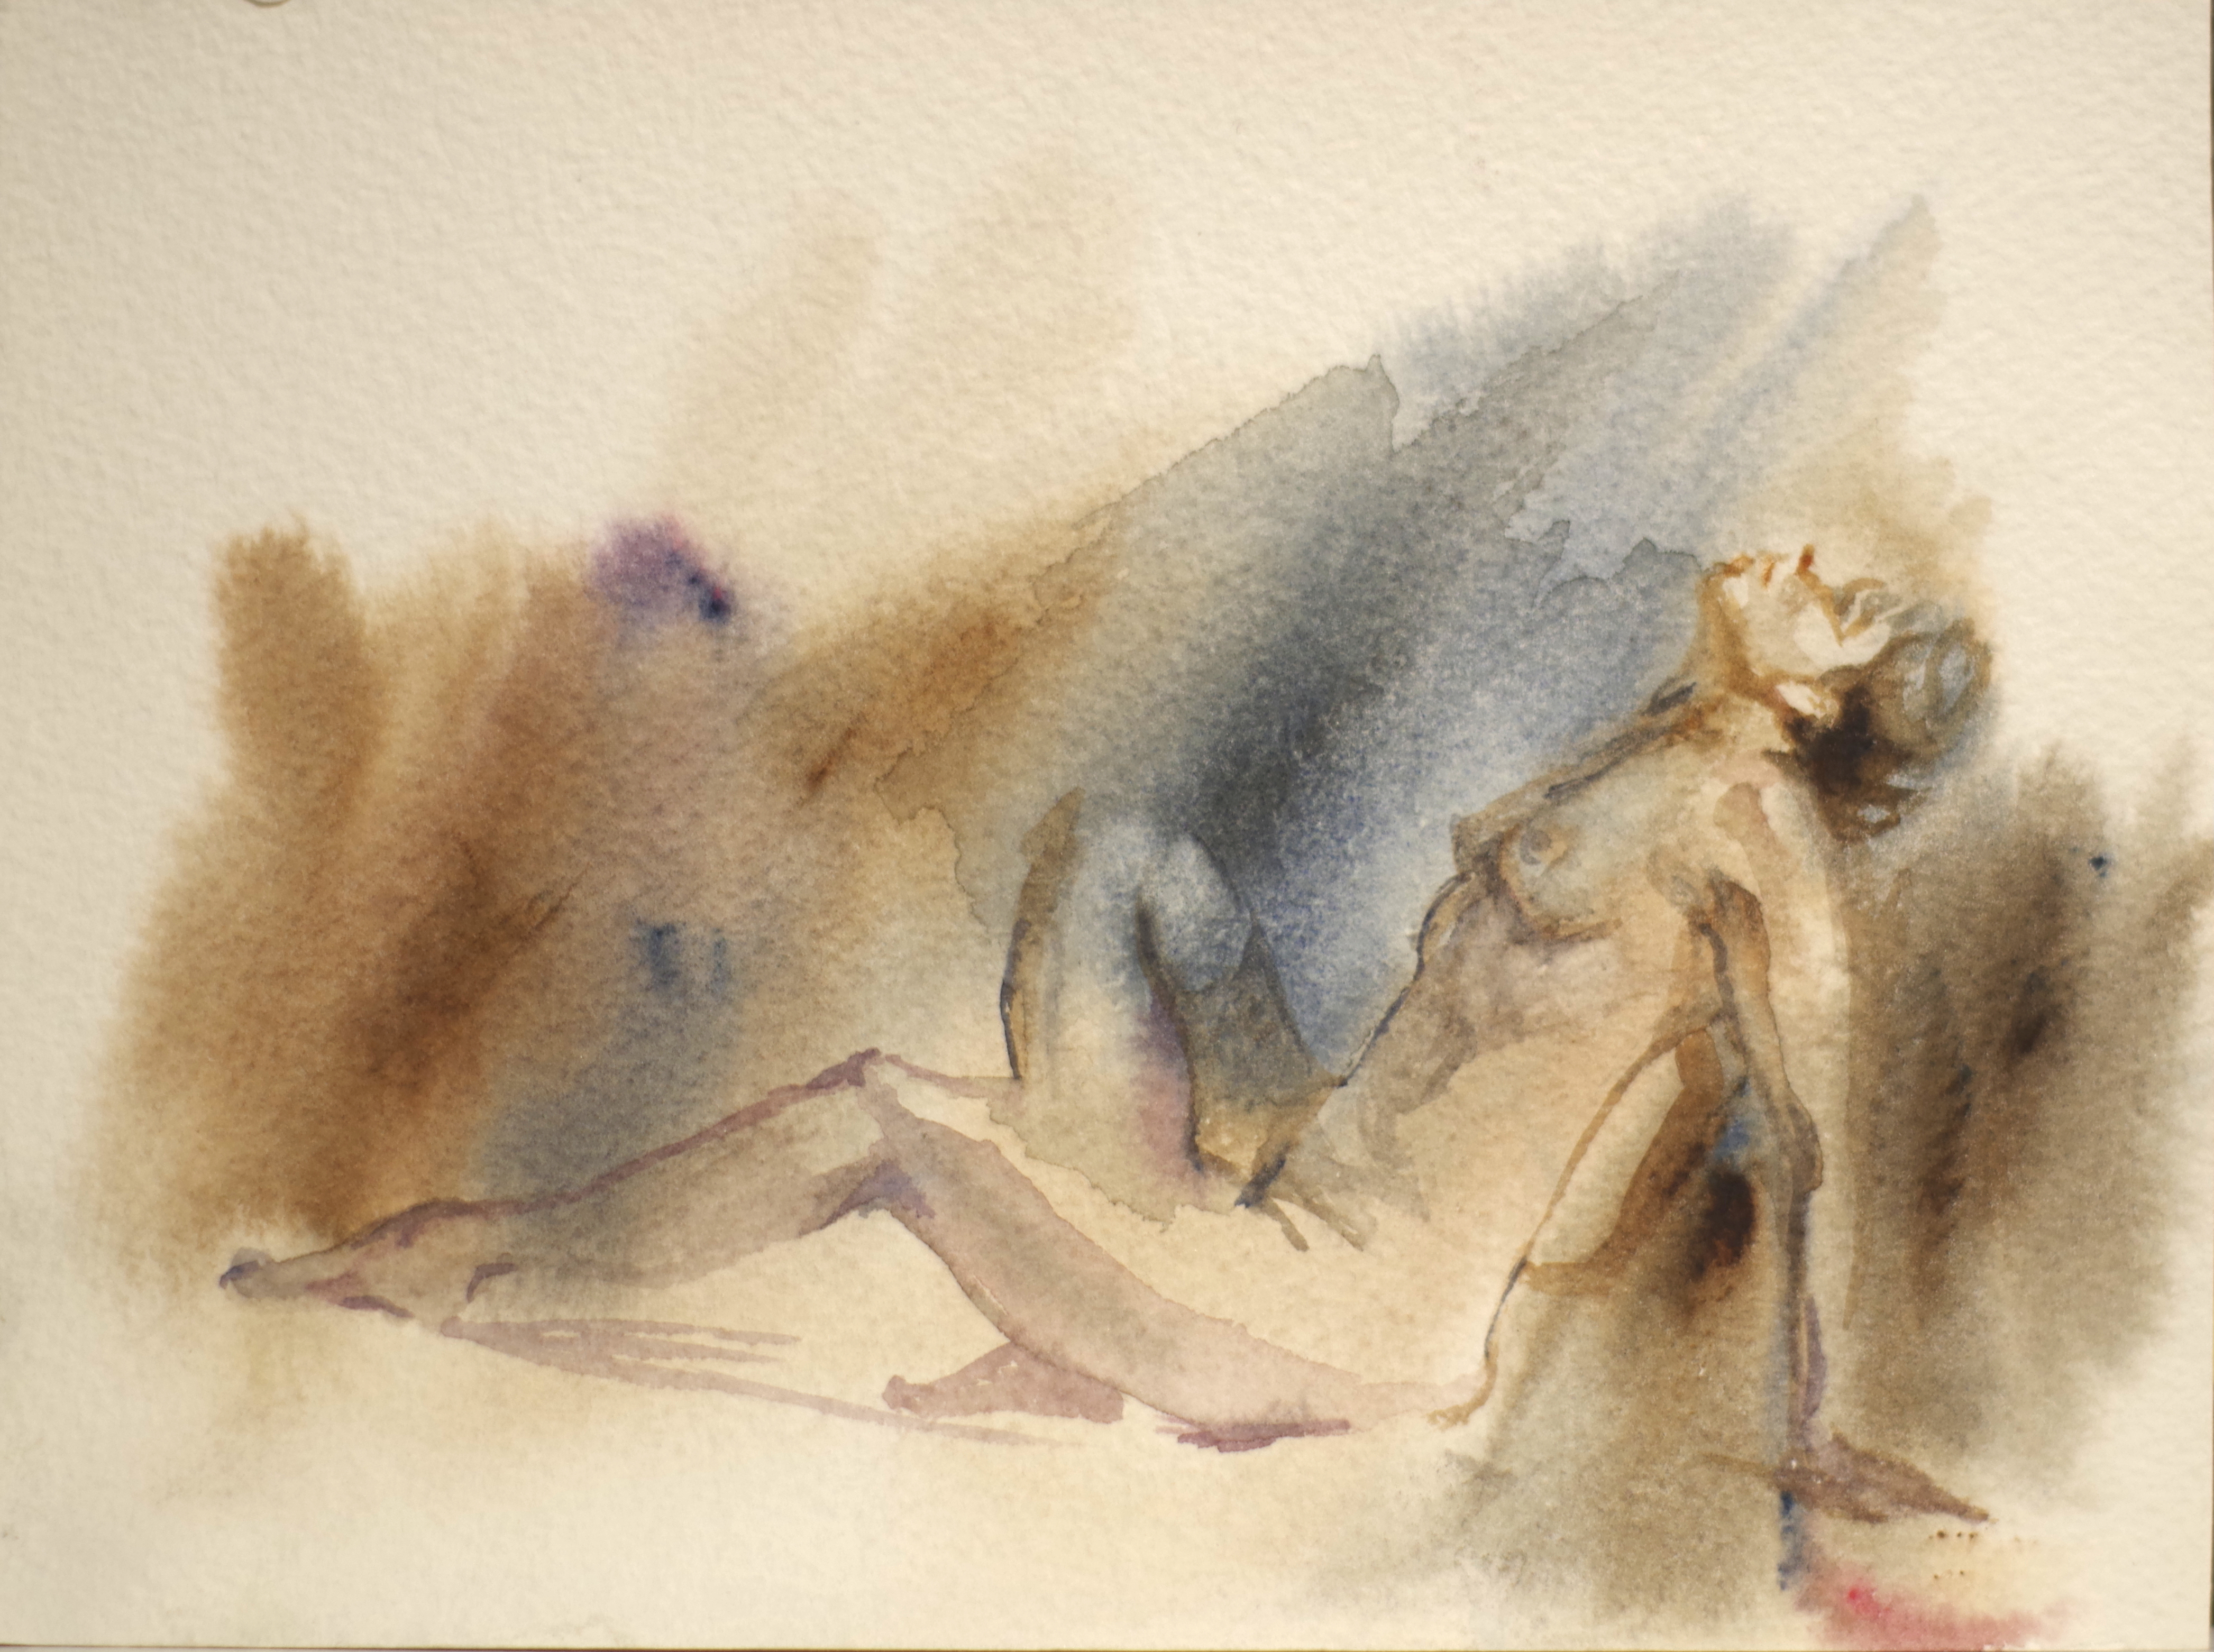 Waking 2 (watercolor, 15x20)